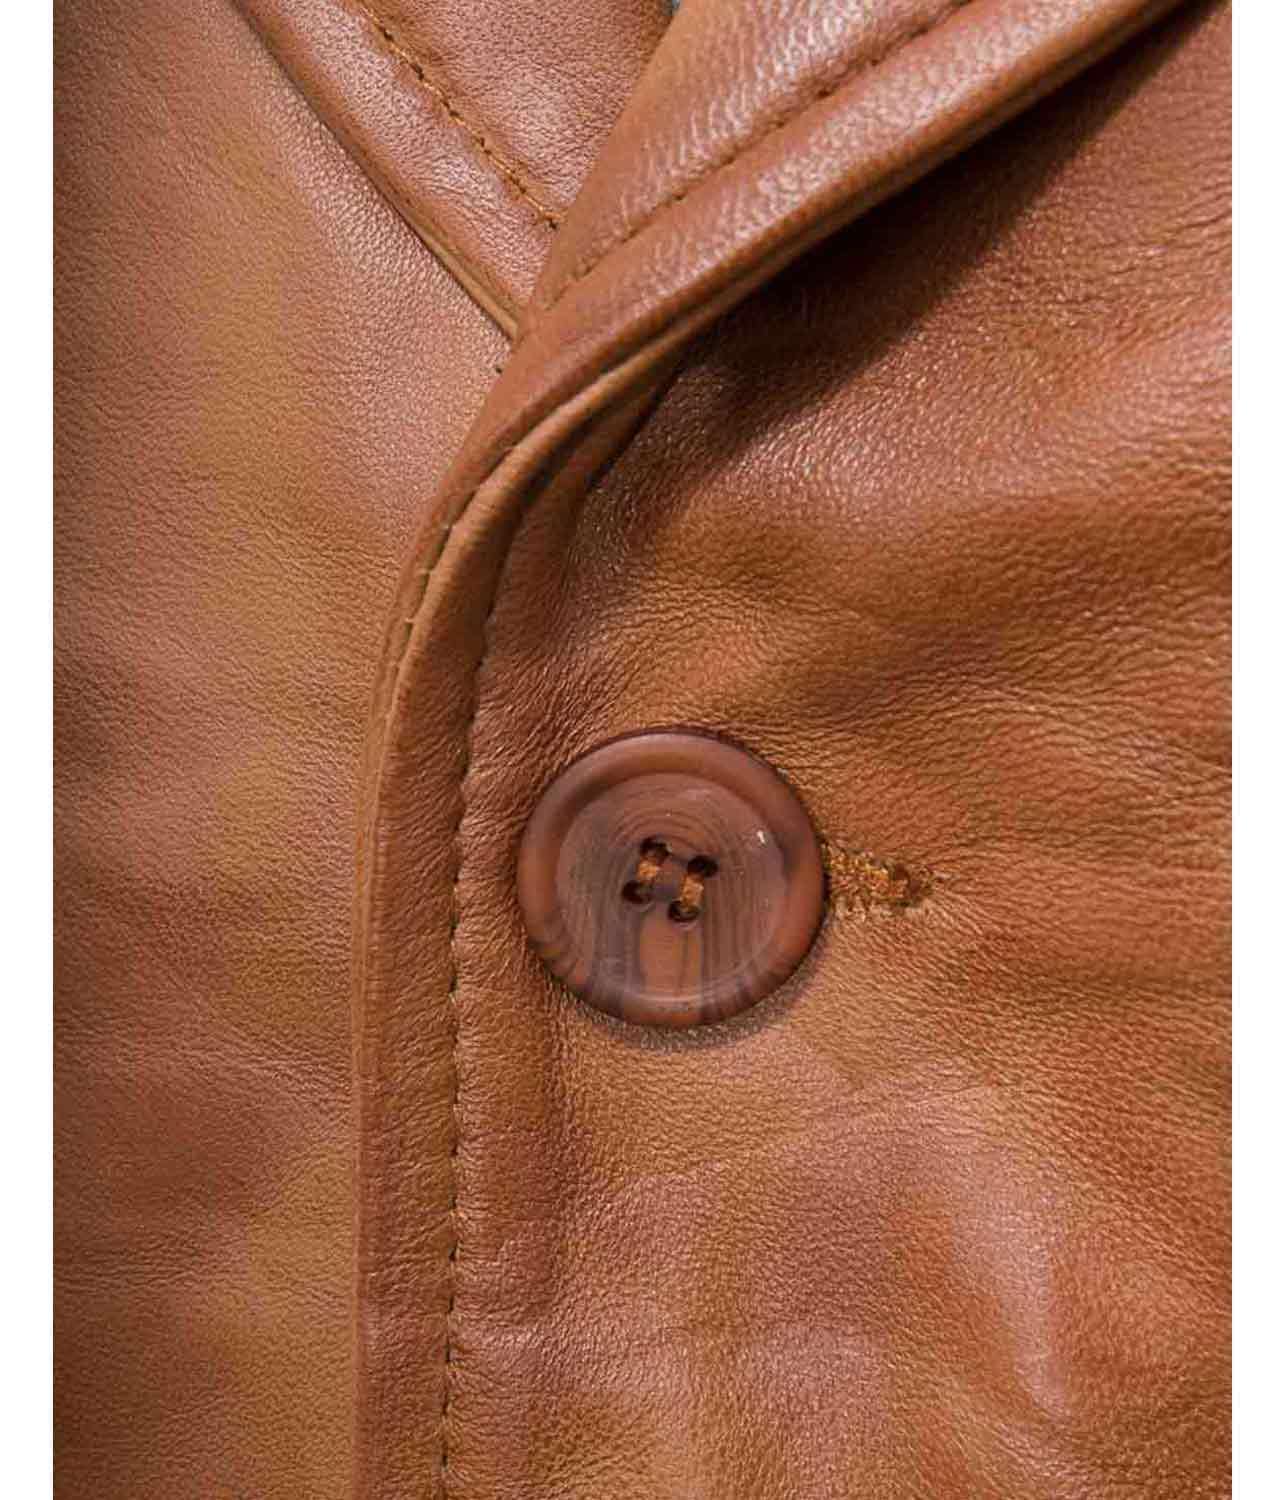 Spine Spark Men's Horse Riding Fashion Tan Brown Leather Vest